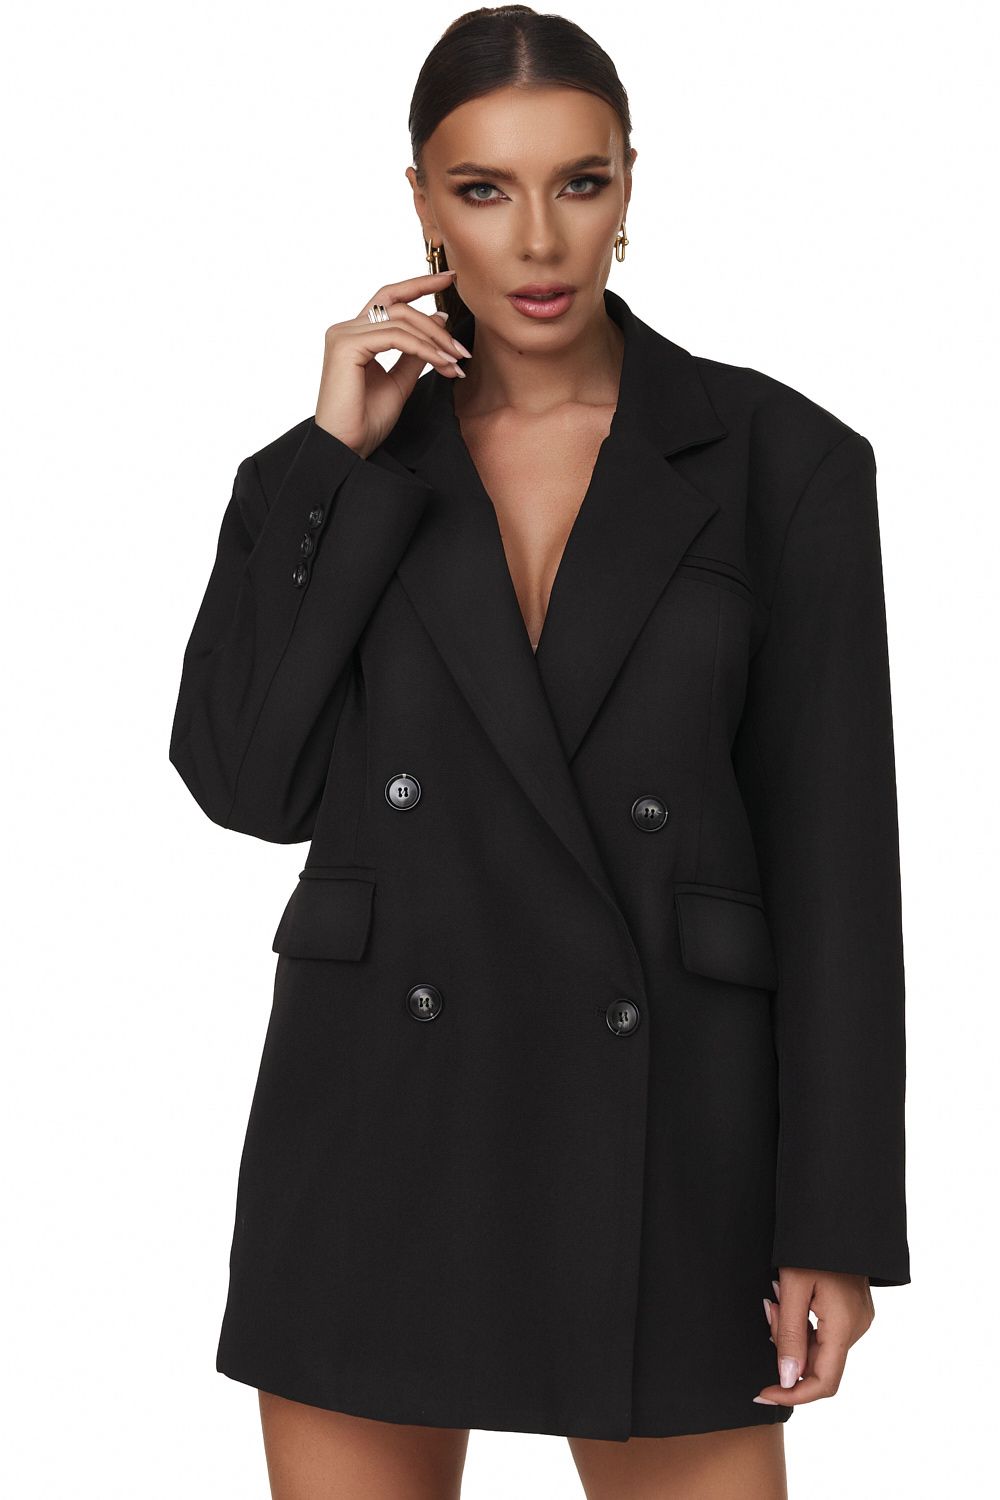 Elegant black ladies jacket Revely Bogas